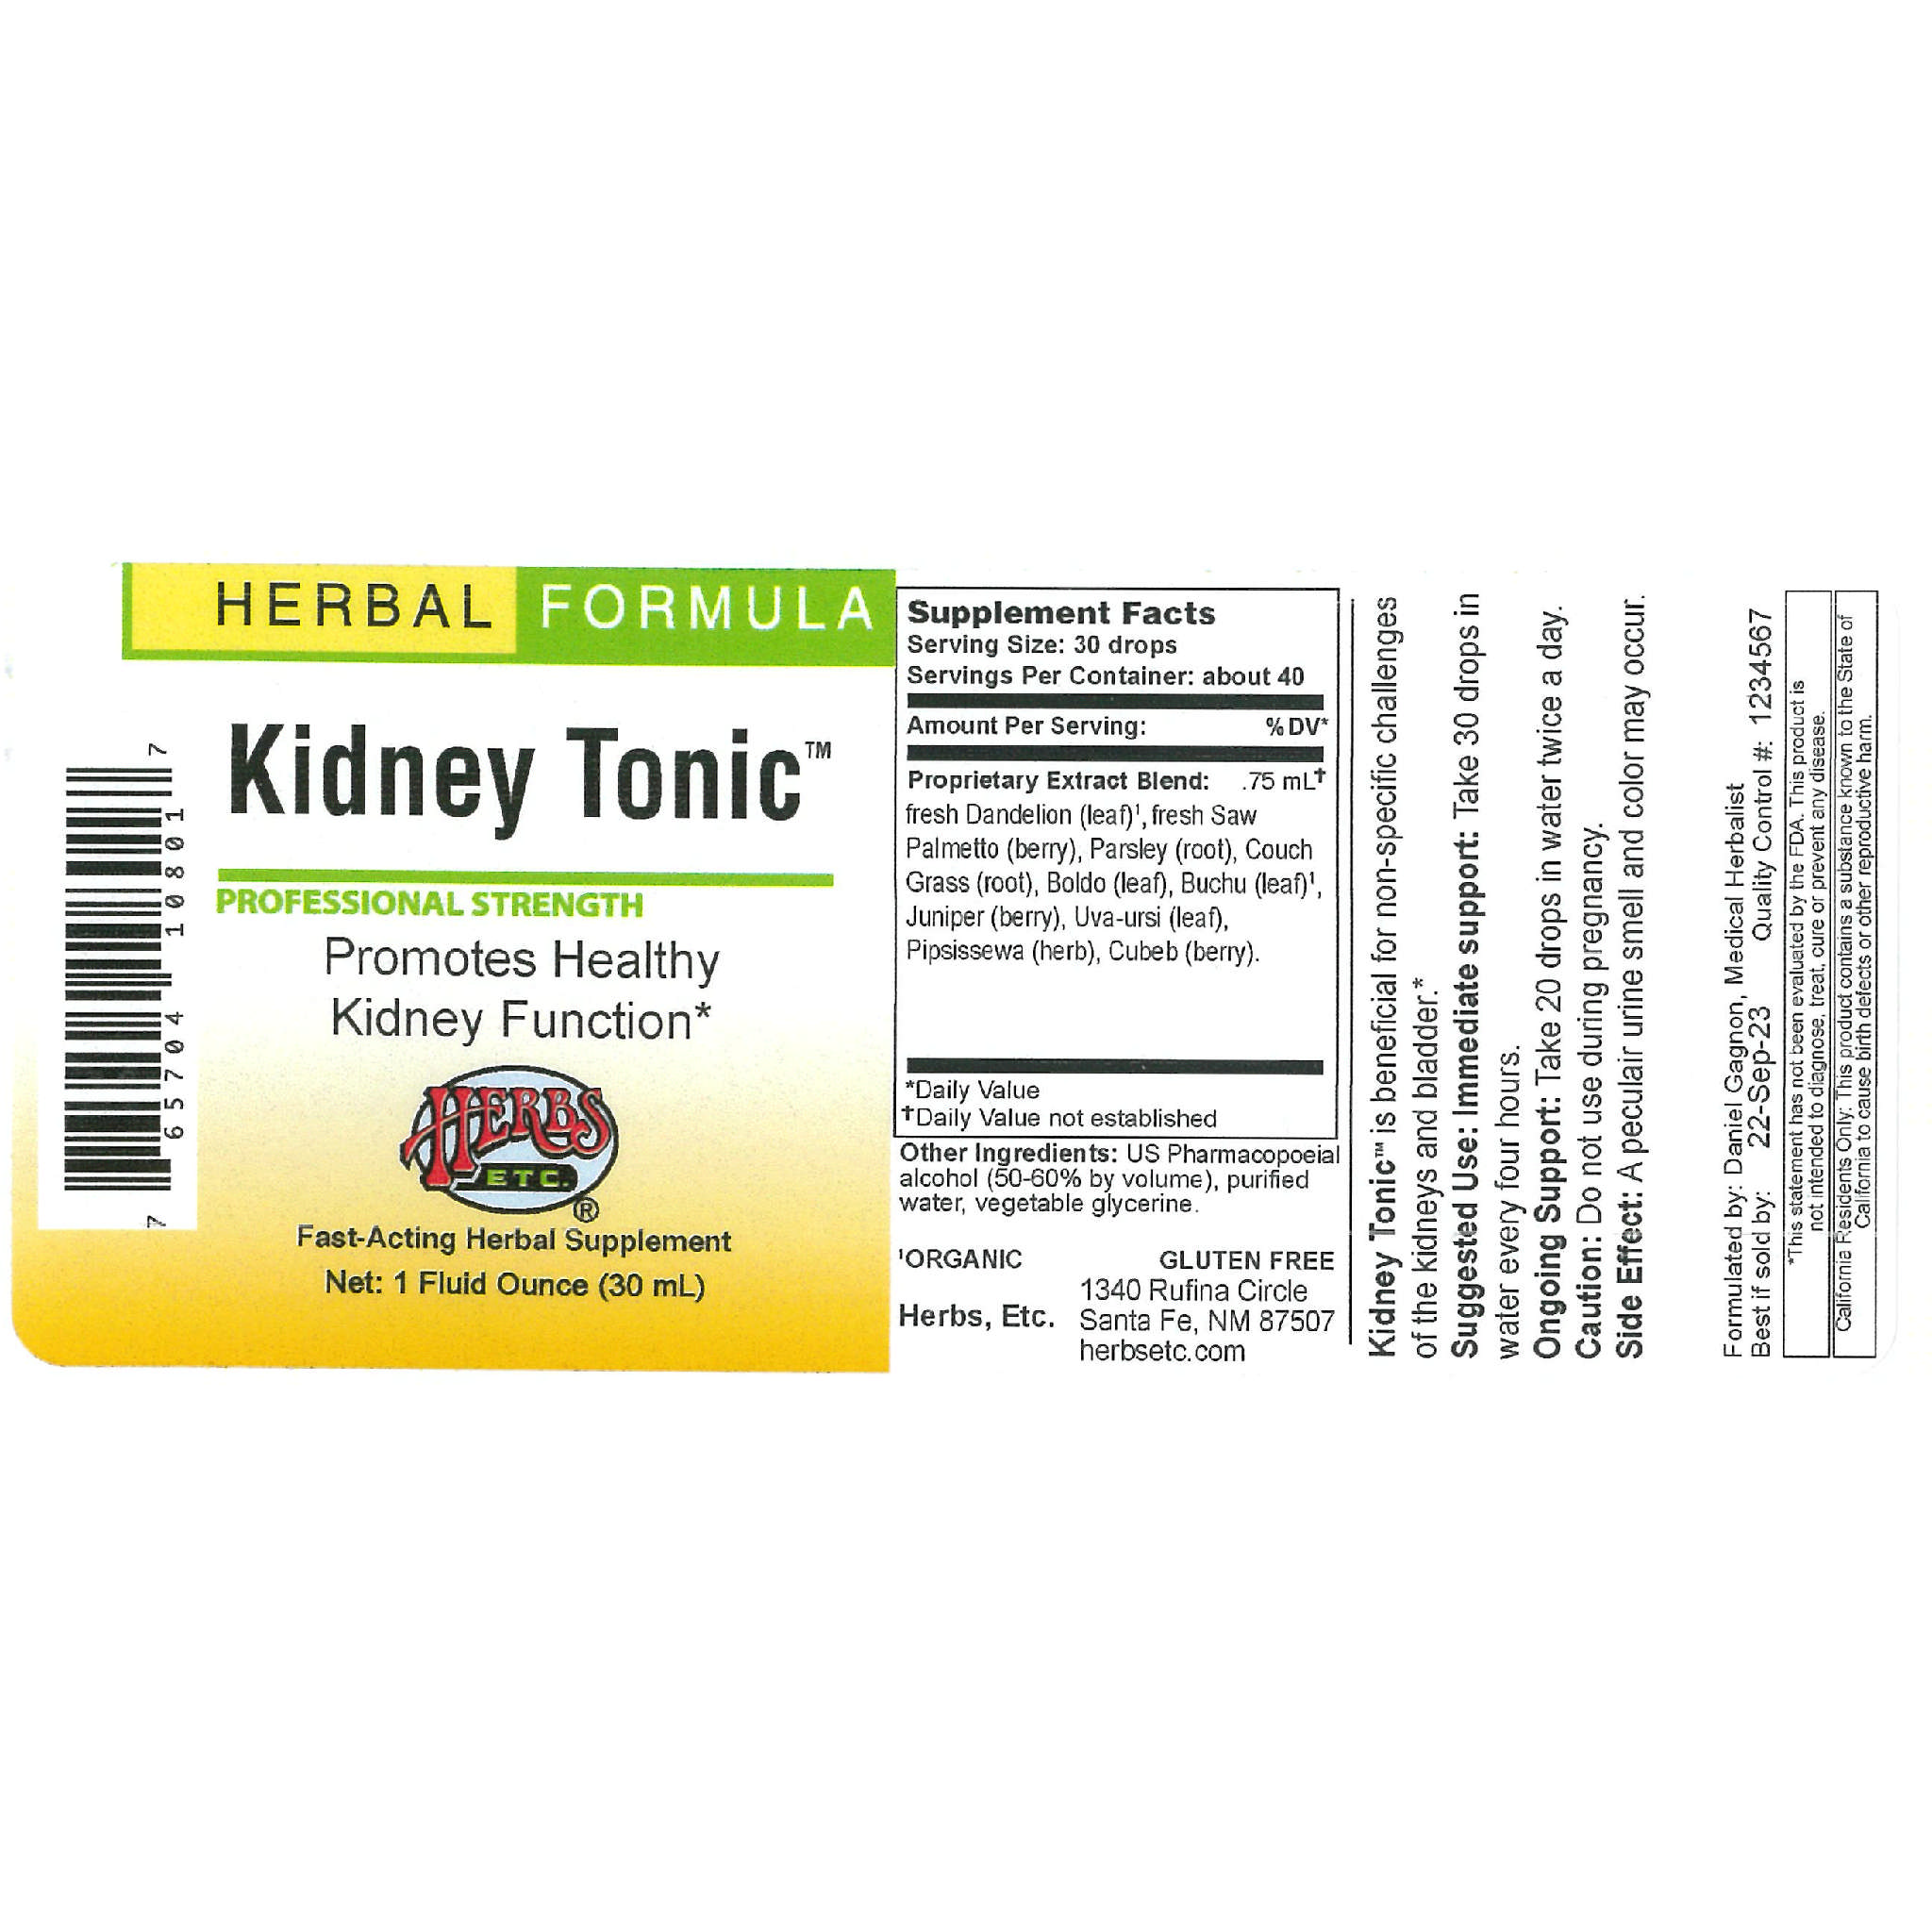 Herbs Etc - Kidney Tonic